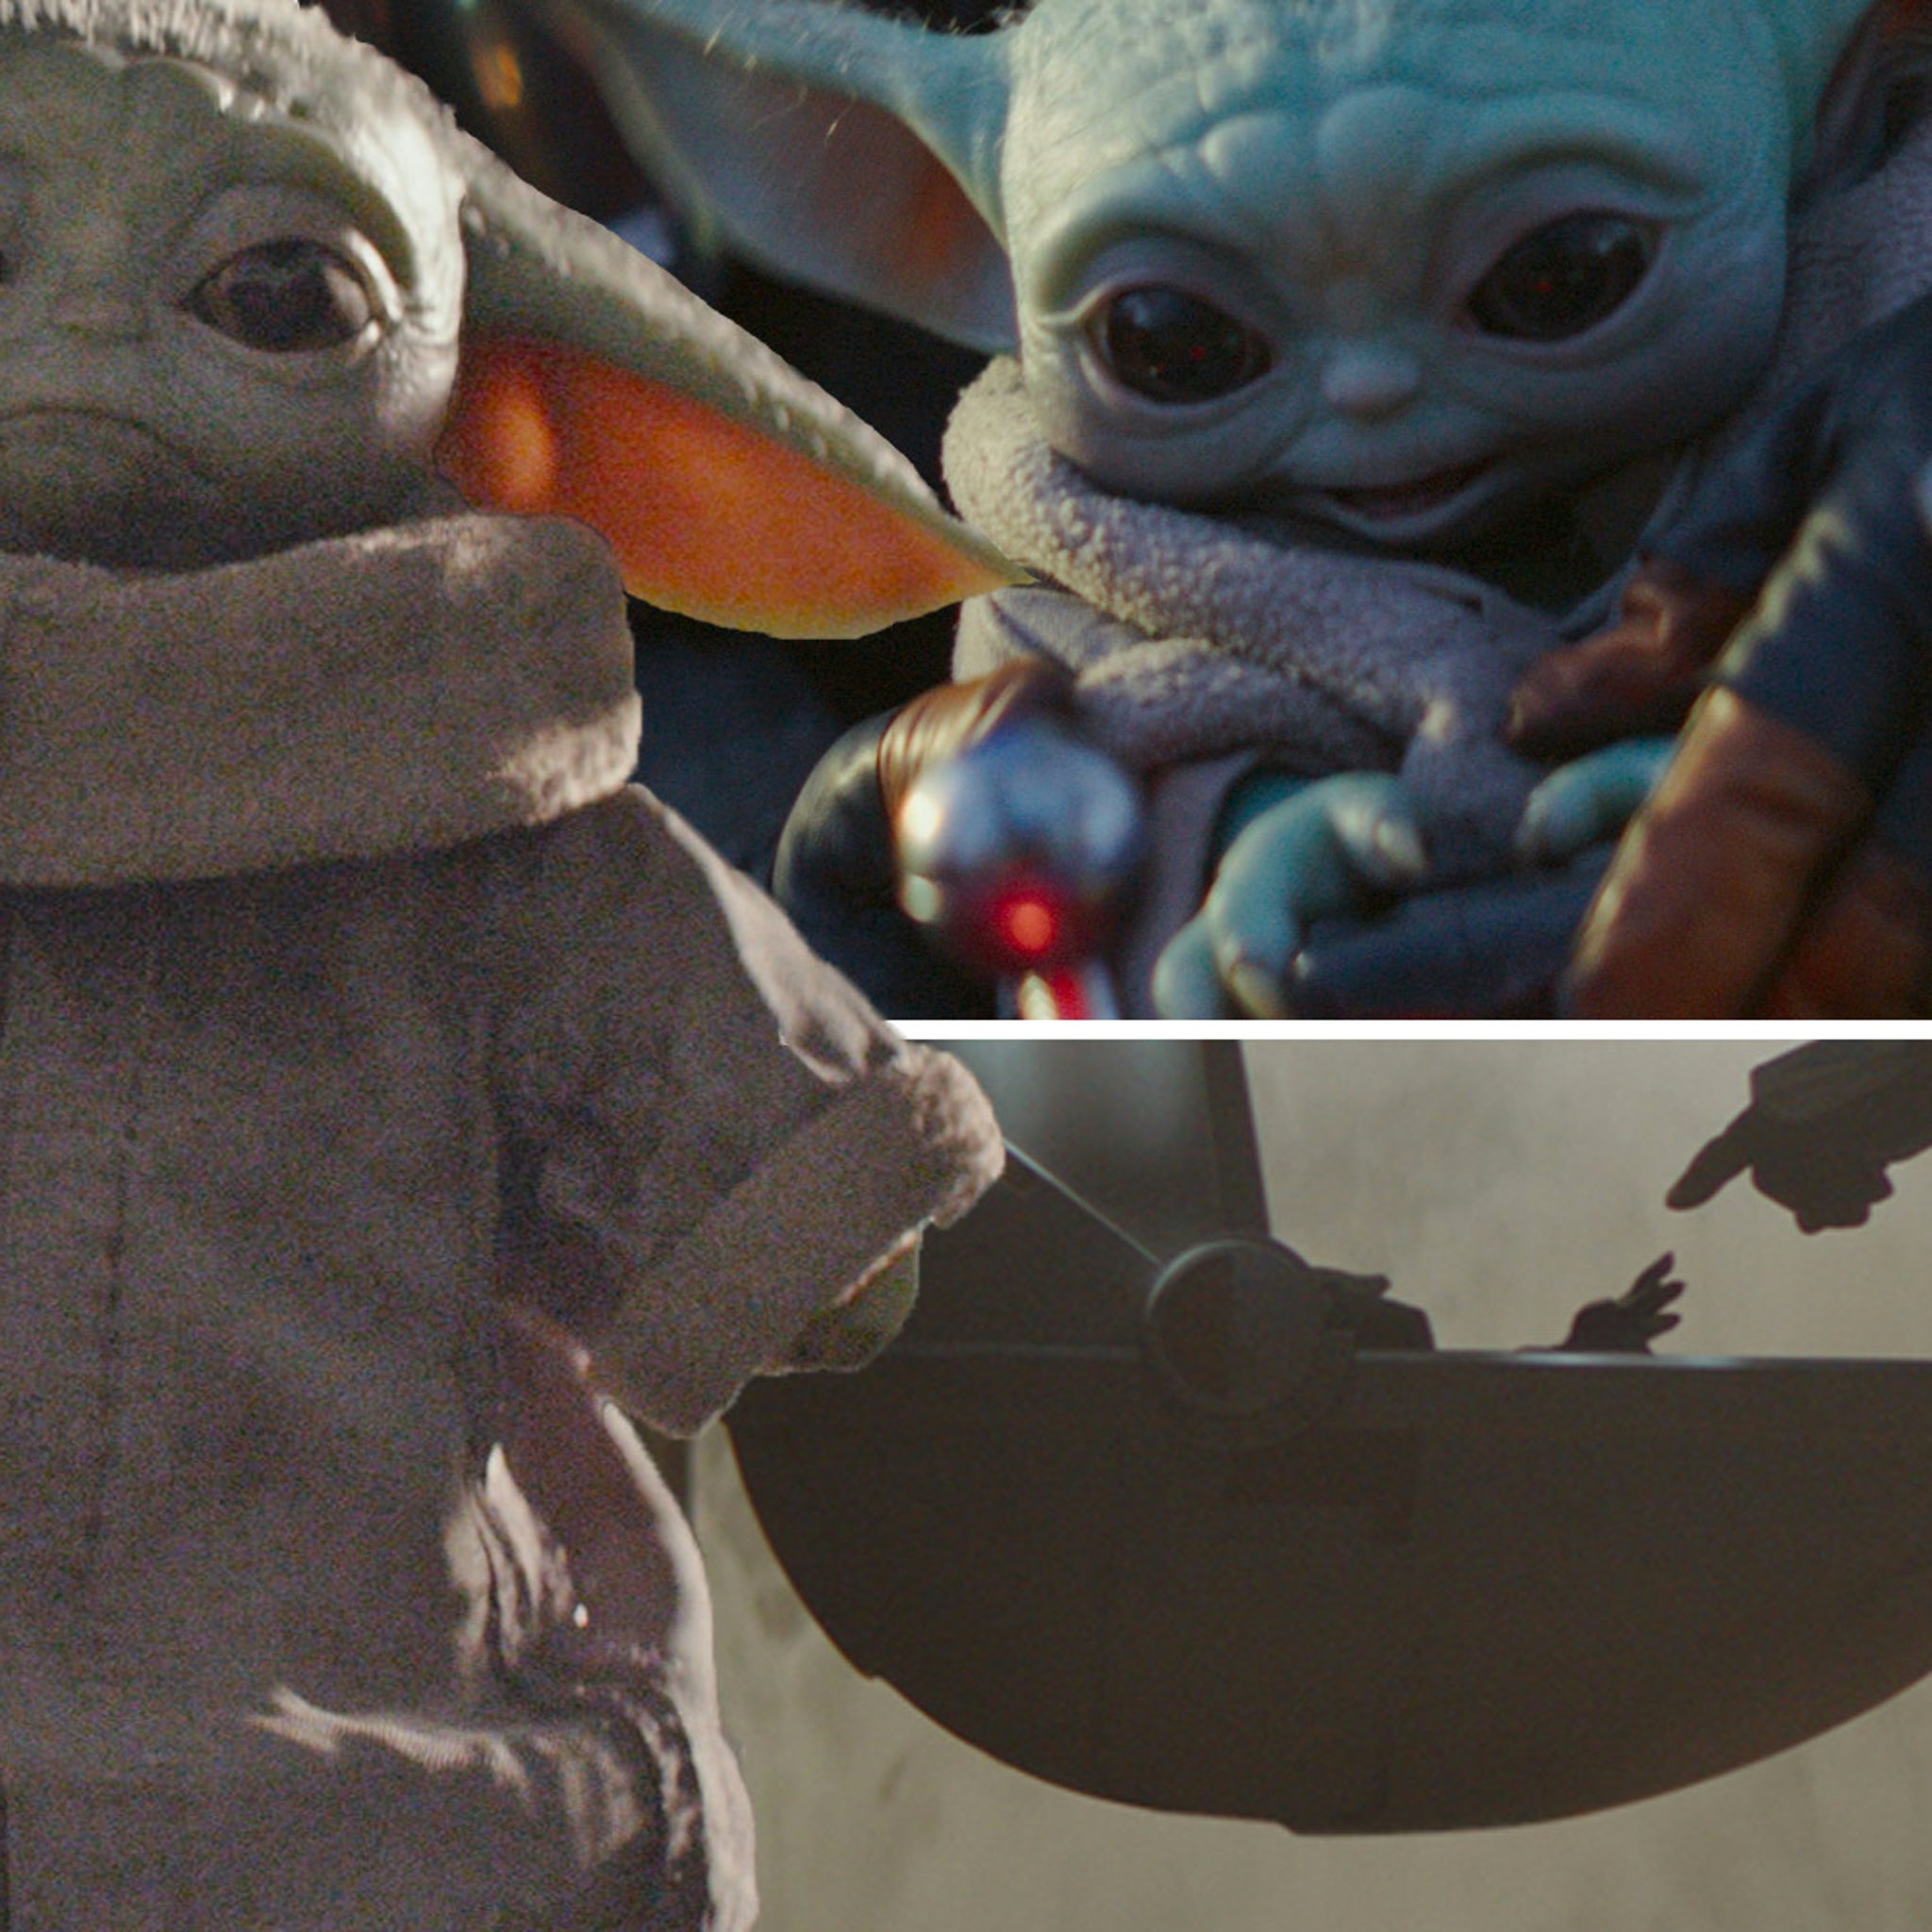 The Best Baby Yoda Memes From Disney's The Mandalorian